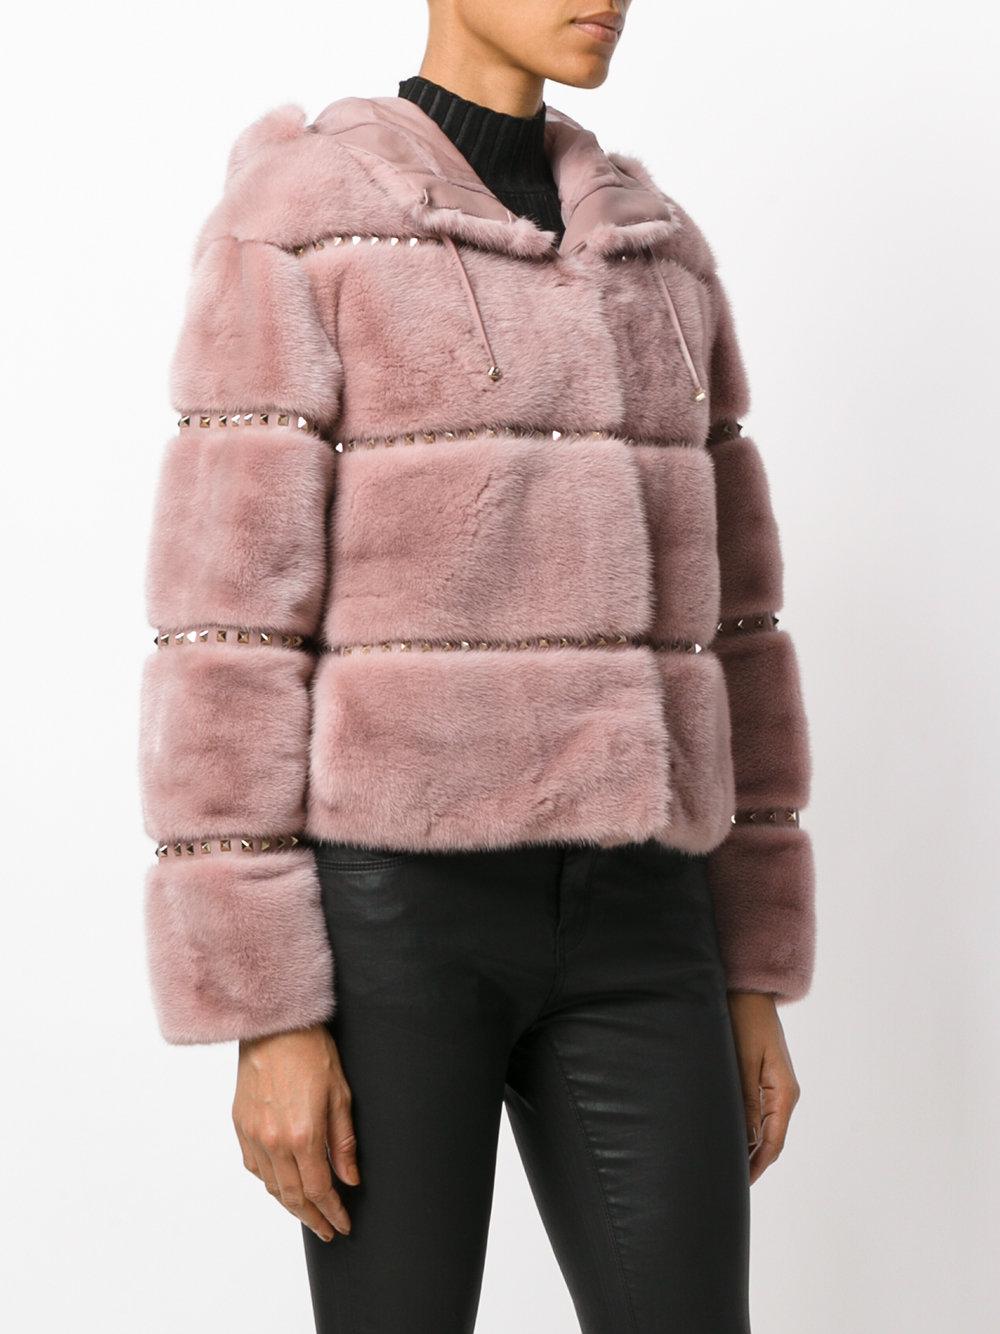 Lyst - Valentino Rockstud Jacket in Pink